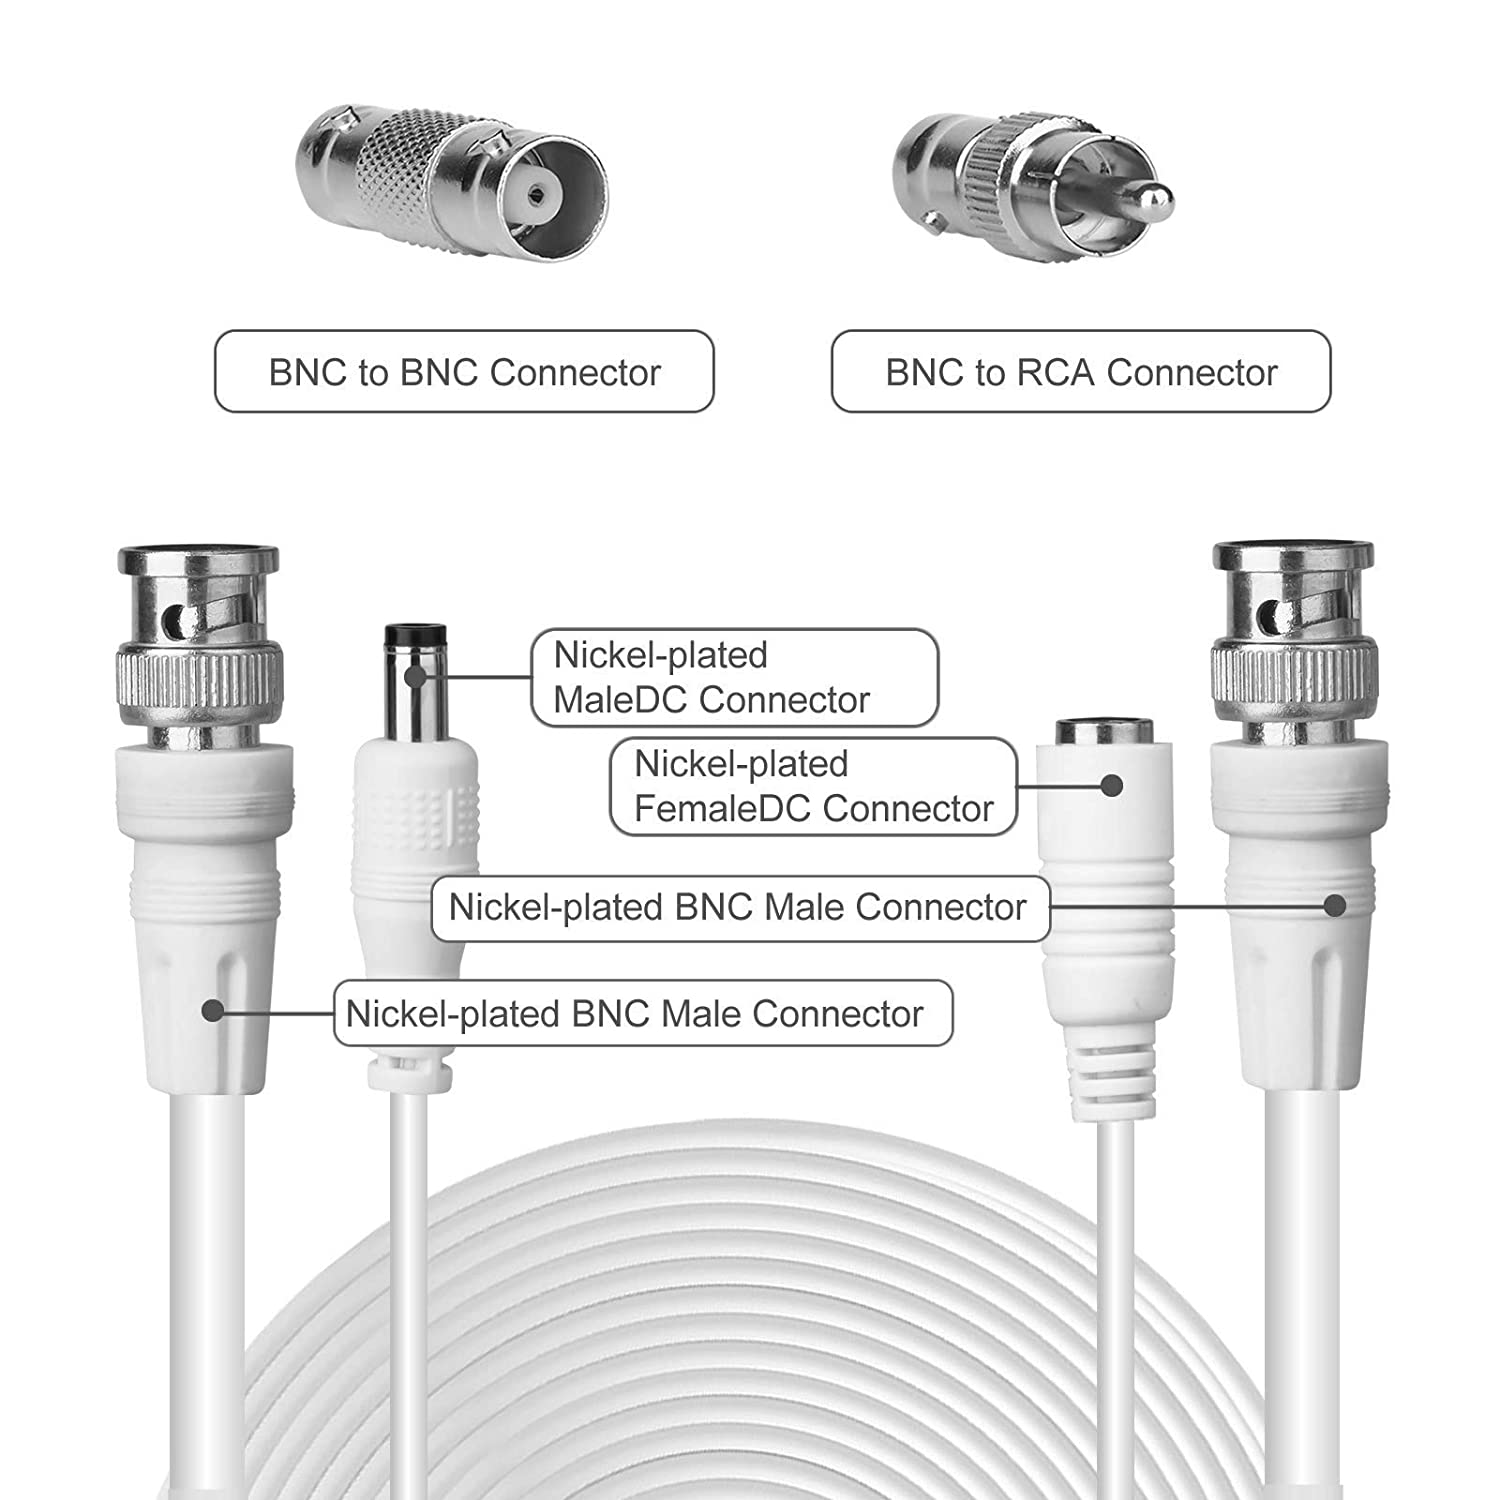 Male CCTV LED DC Power Plug Jack Adaptor Connector for cat5 RG59 shotgun cable